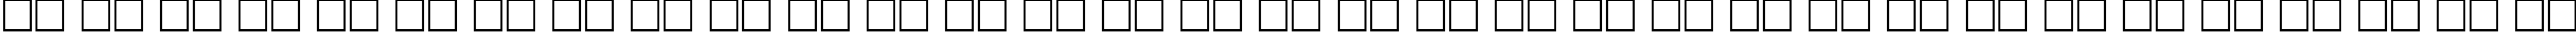 Пример написания русского алфавита шрифтом BodoniCTT BoldItalic